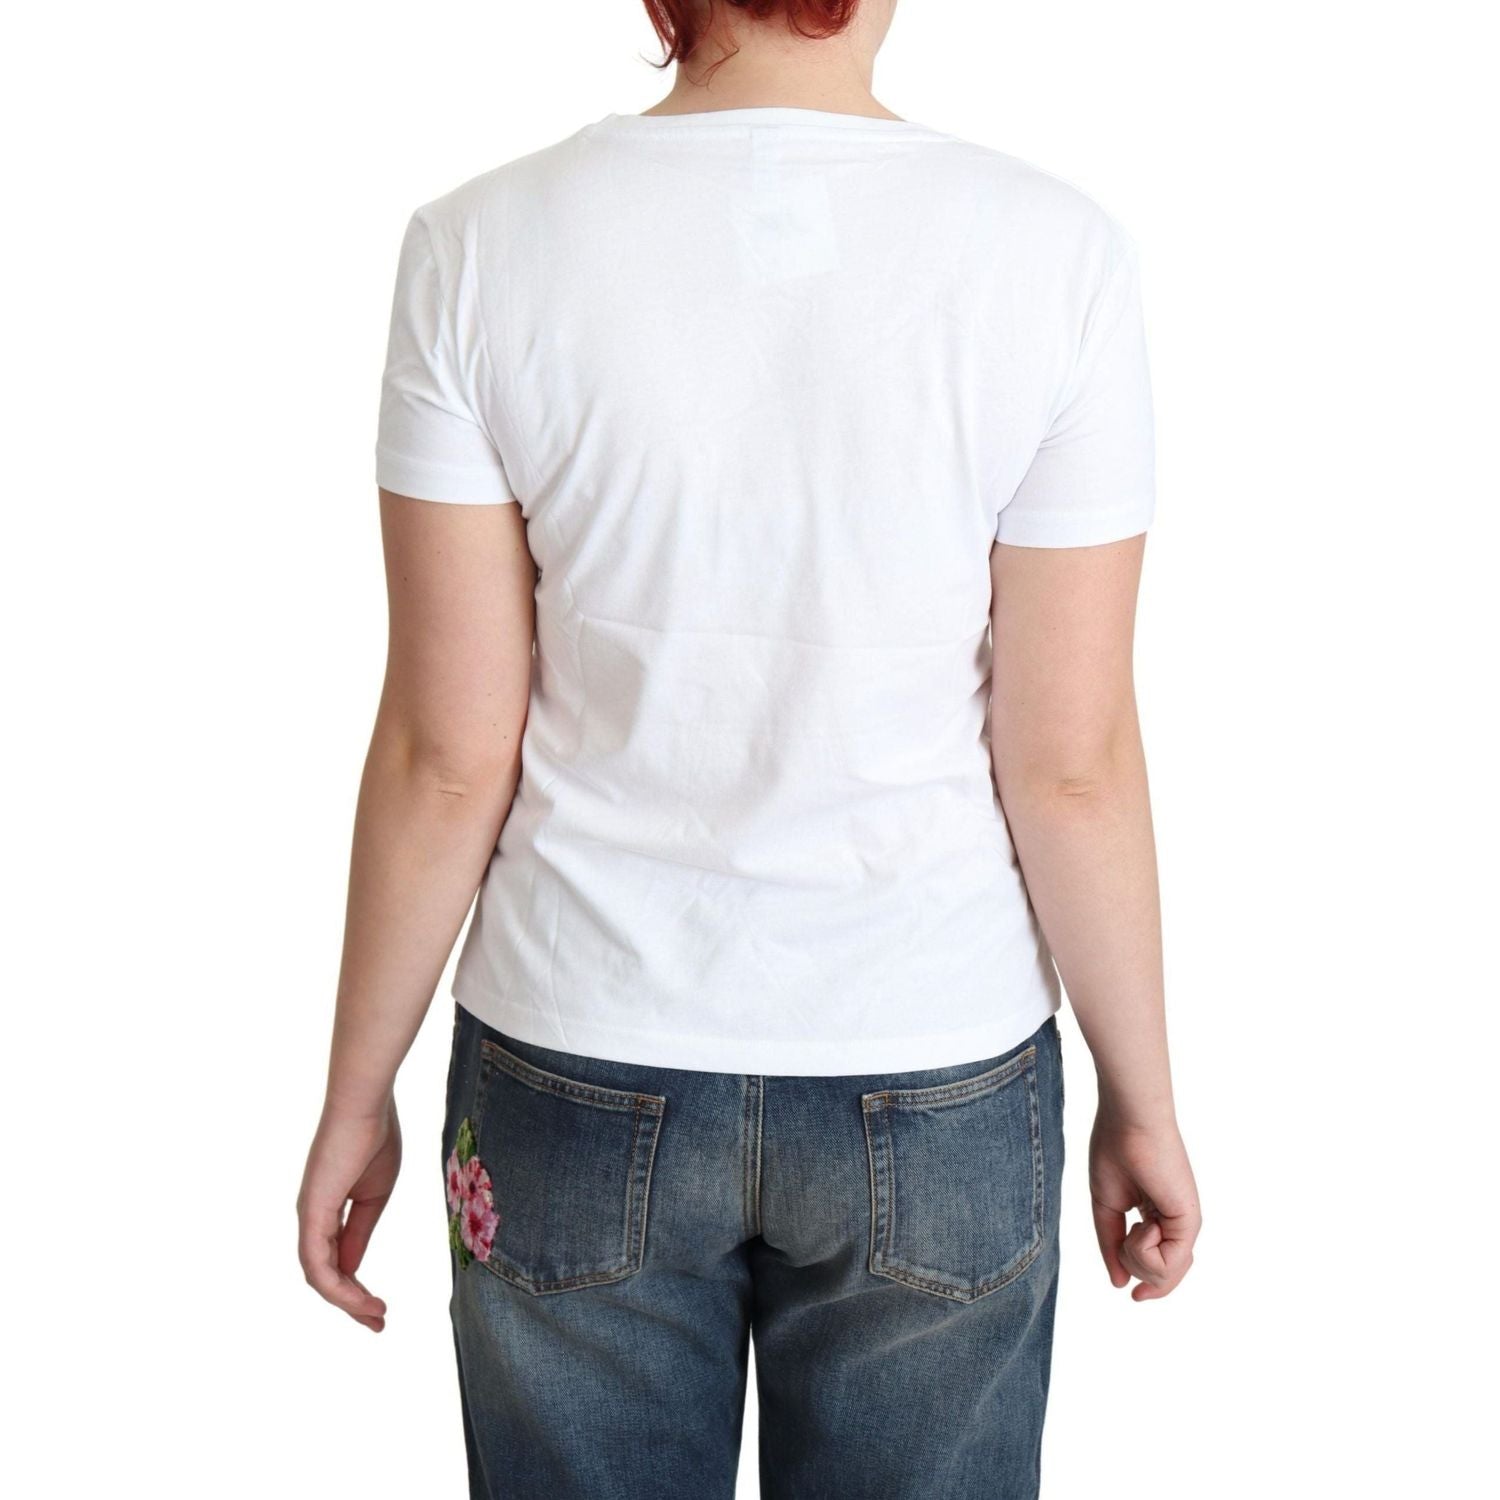 Moschino | White Cotton Graphic Triangle Print T-shirt | 89.00 - McRichard Designer Brands